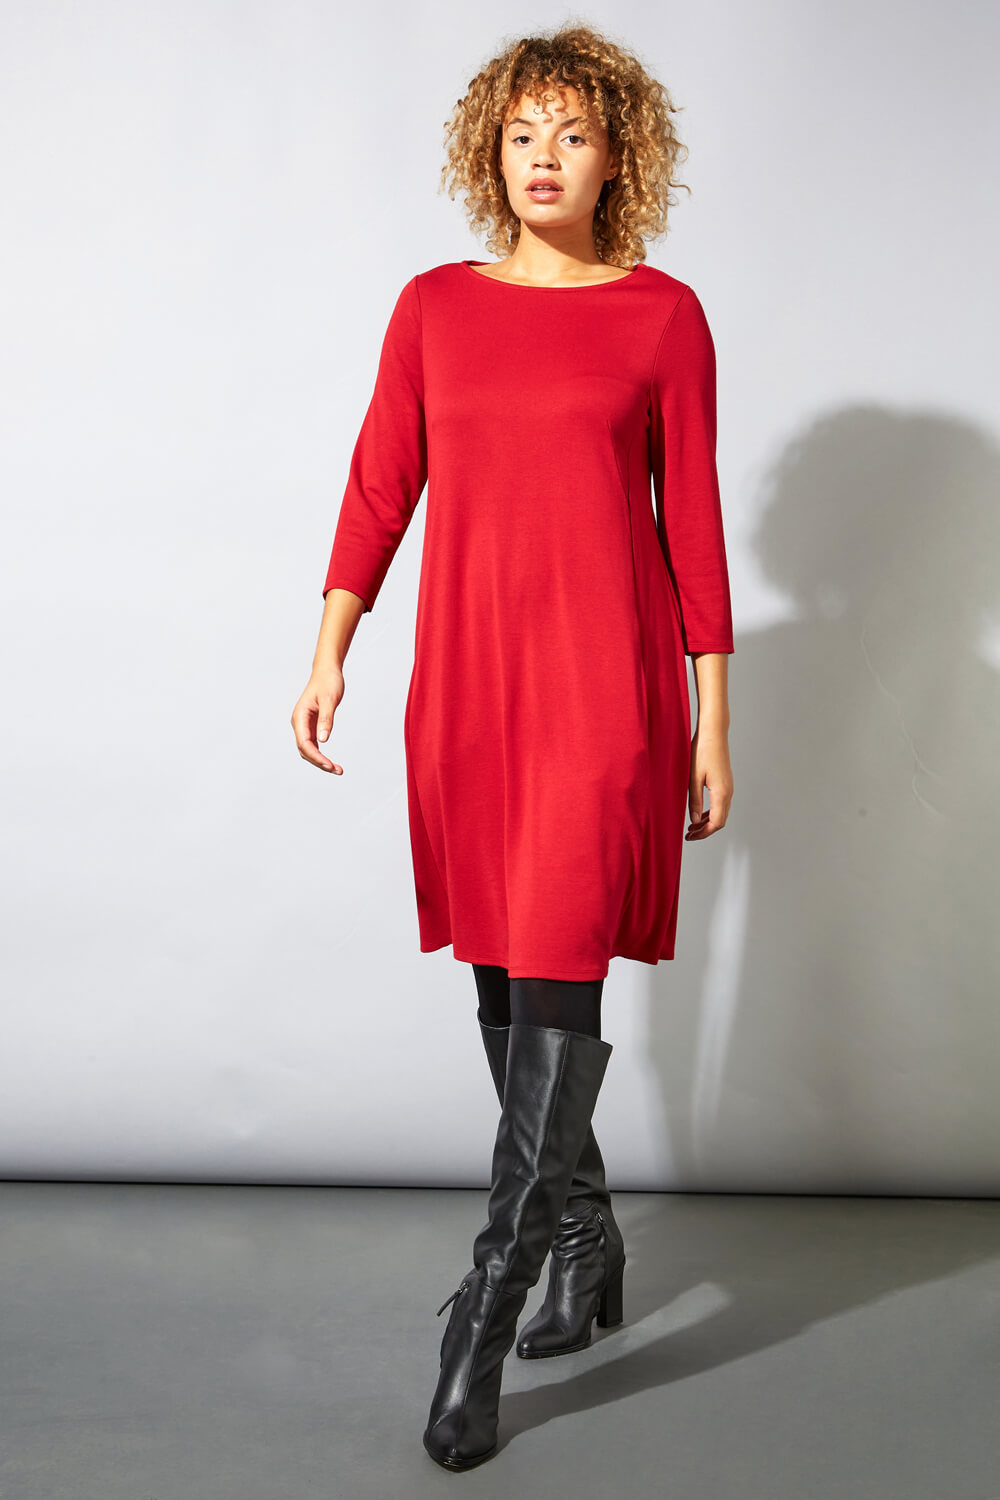 Red A-Line Pocket Detail Swing Dress, Image 3 of 4